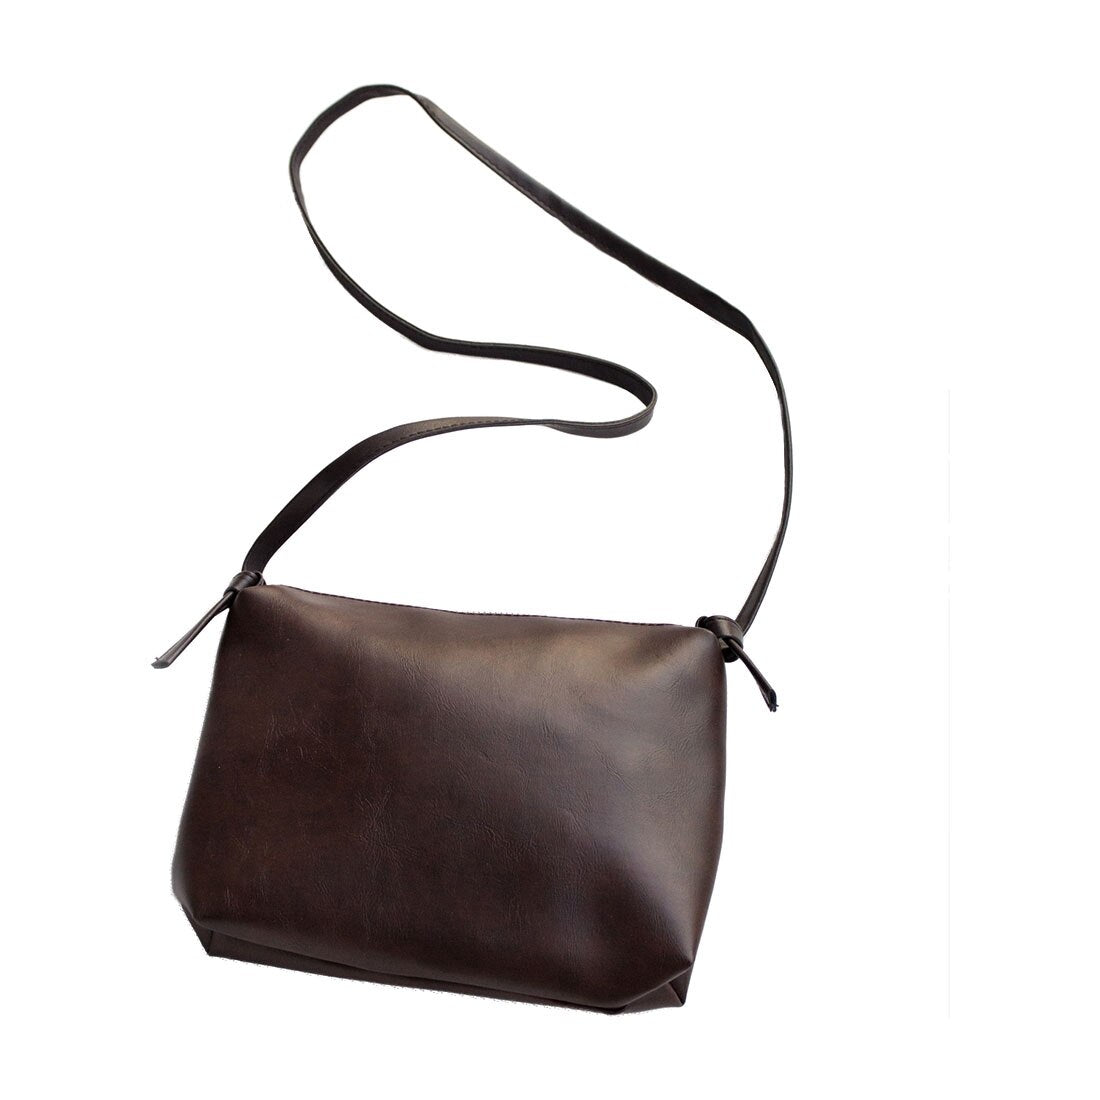 Hot New Women Handbag Shoulder Bags Tote Purse Leather Women Messenger Bag Black - ebowsos